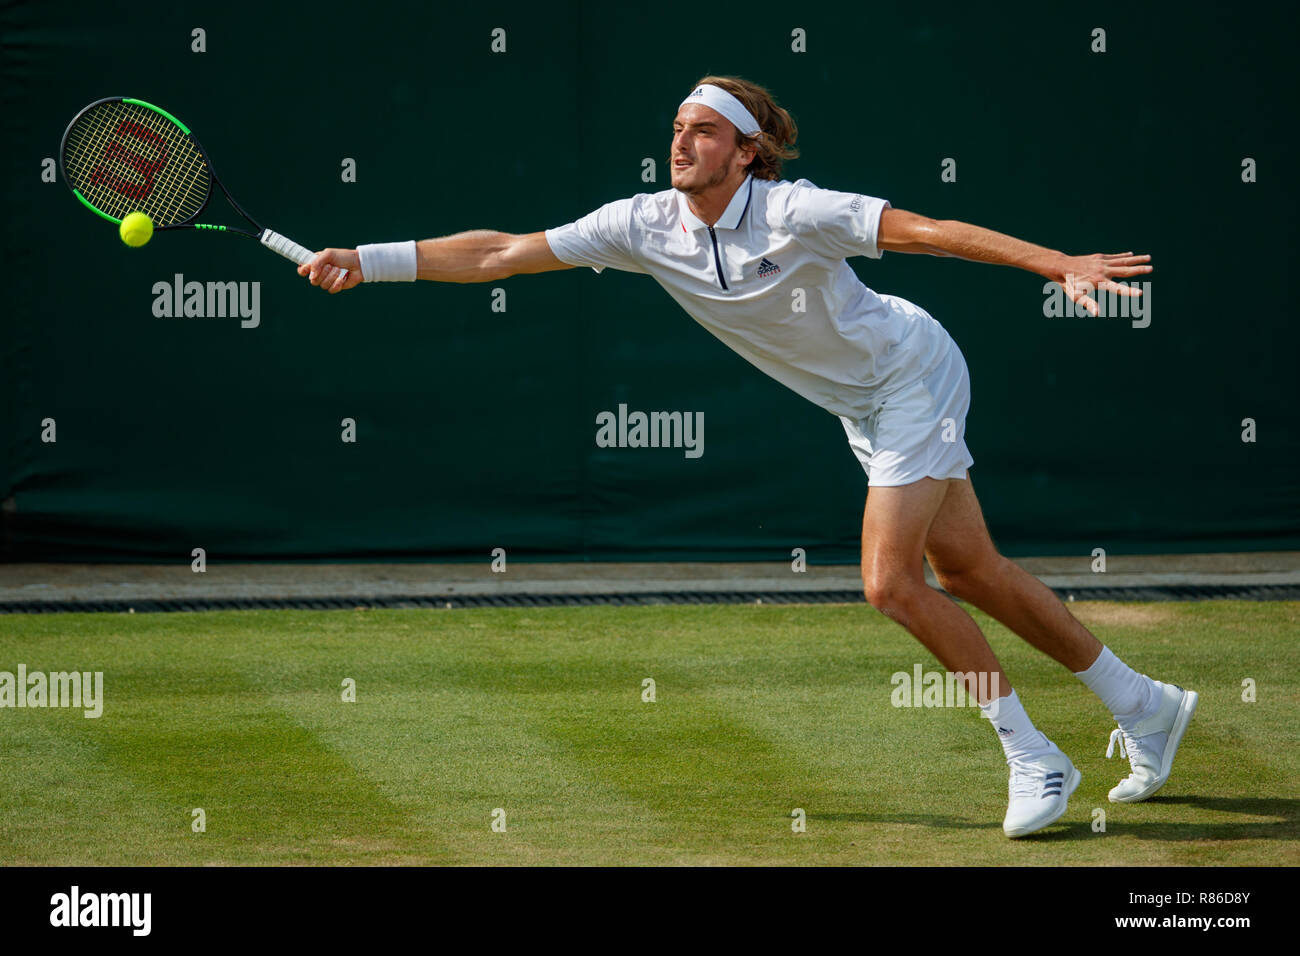 Stefanos Tsitsipas Griechenlands in Aktion während der Wimbledon  Championships 2018 Stockfotografie - Alamy